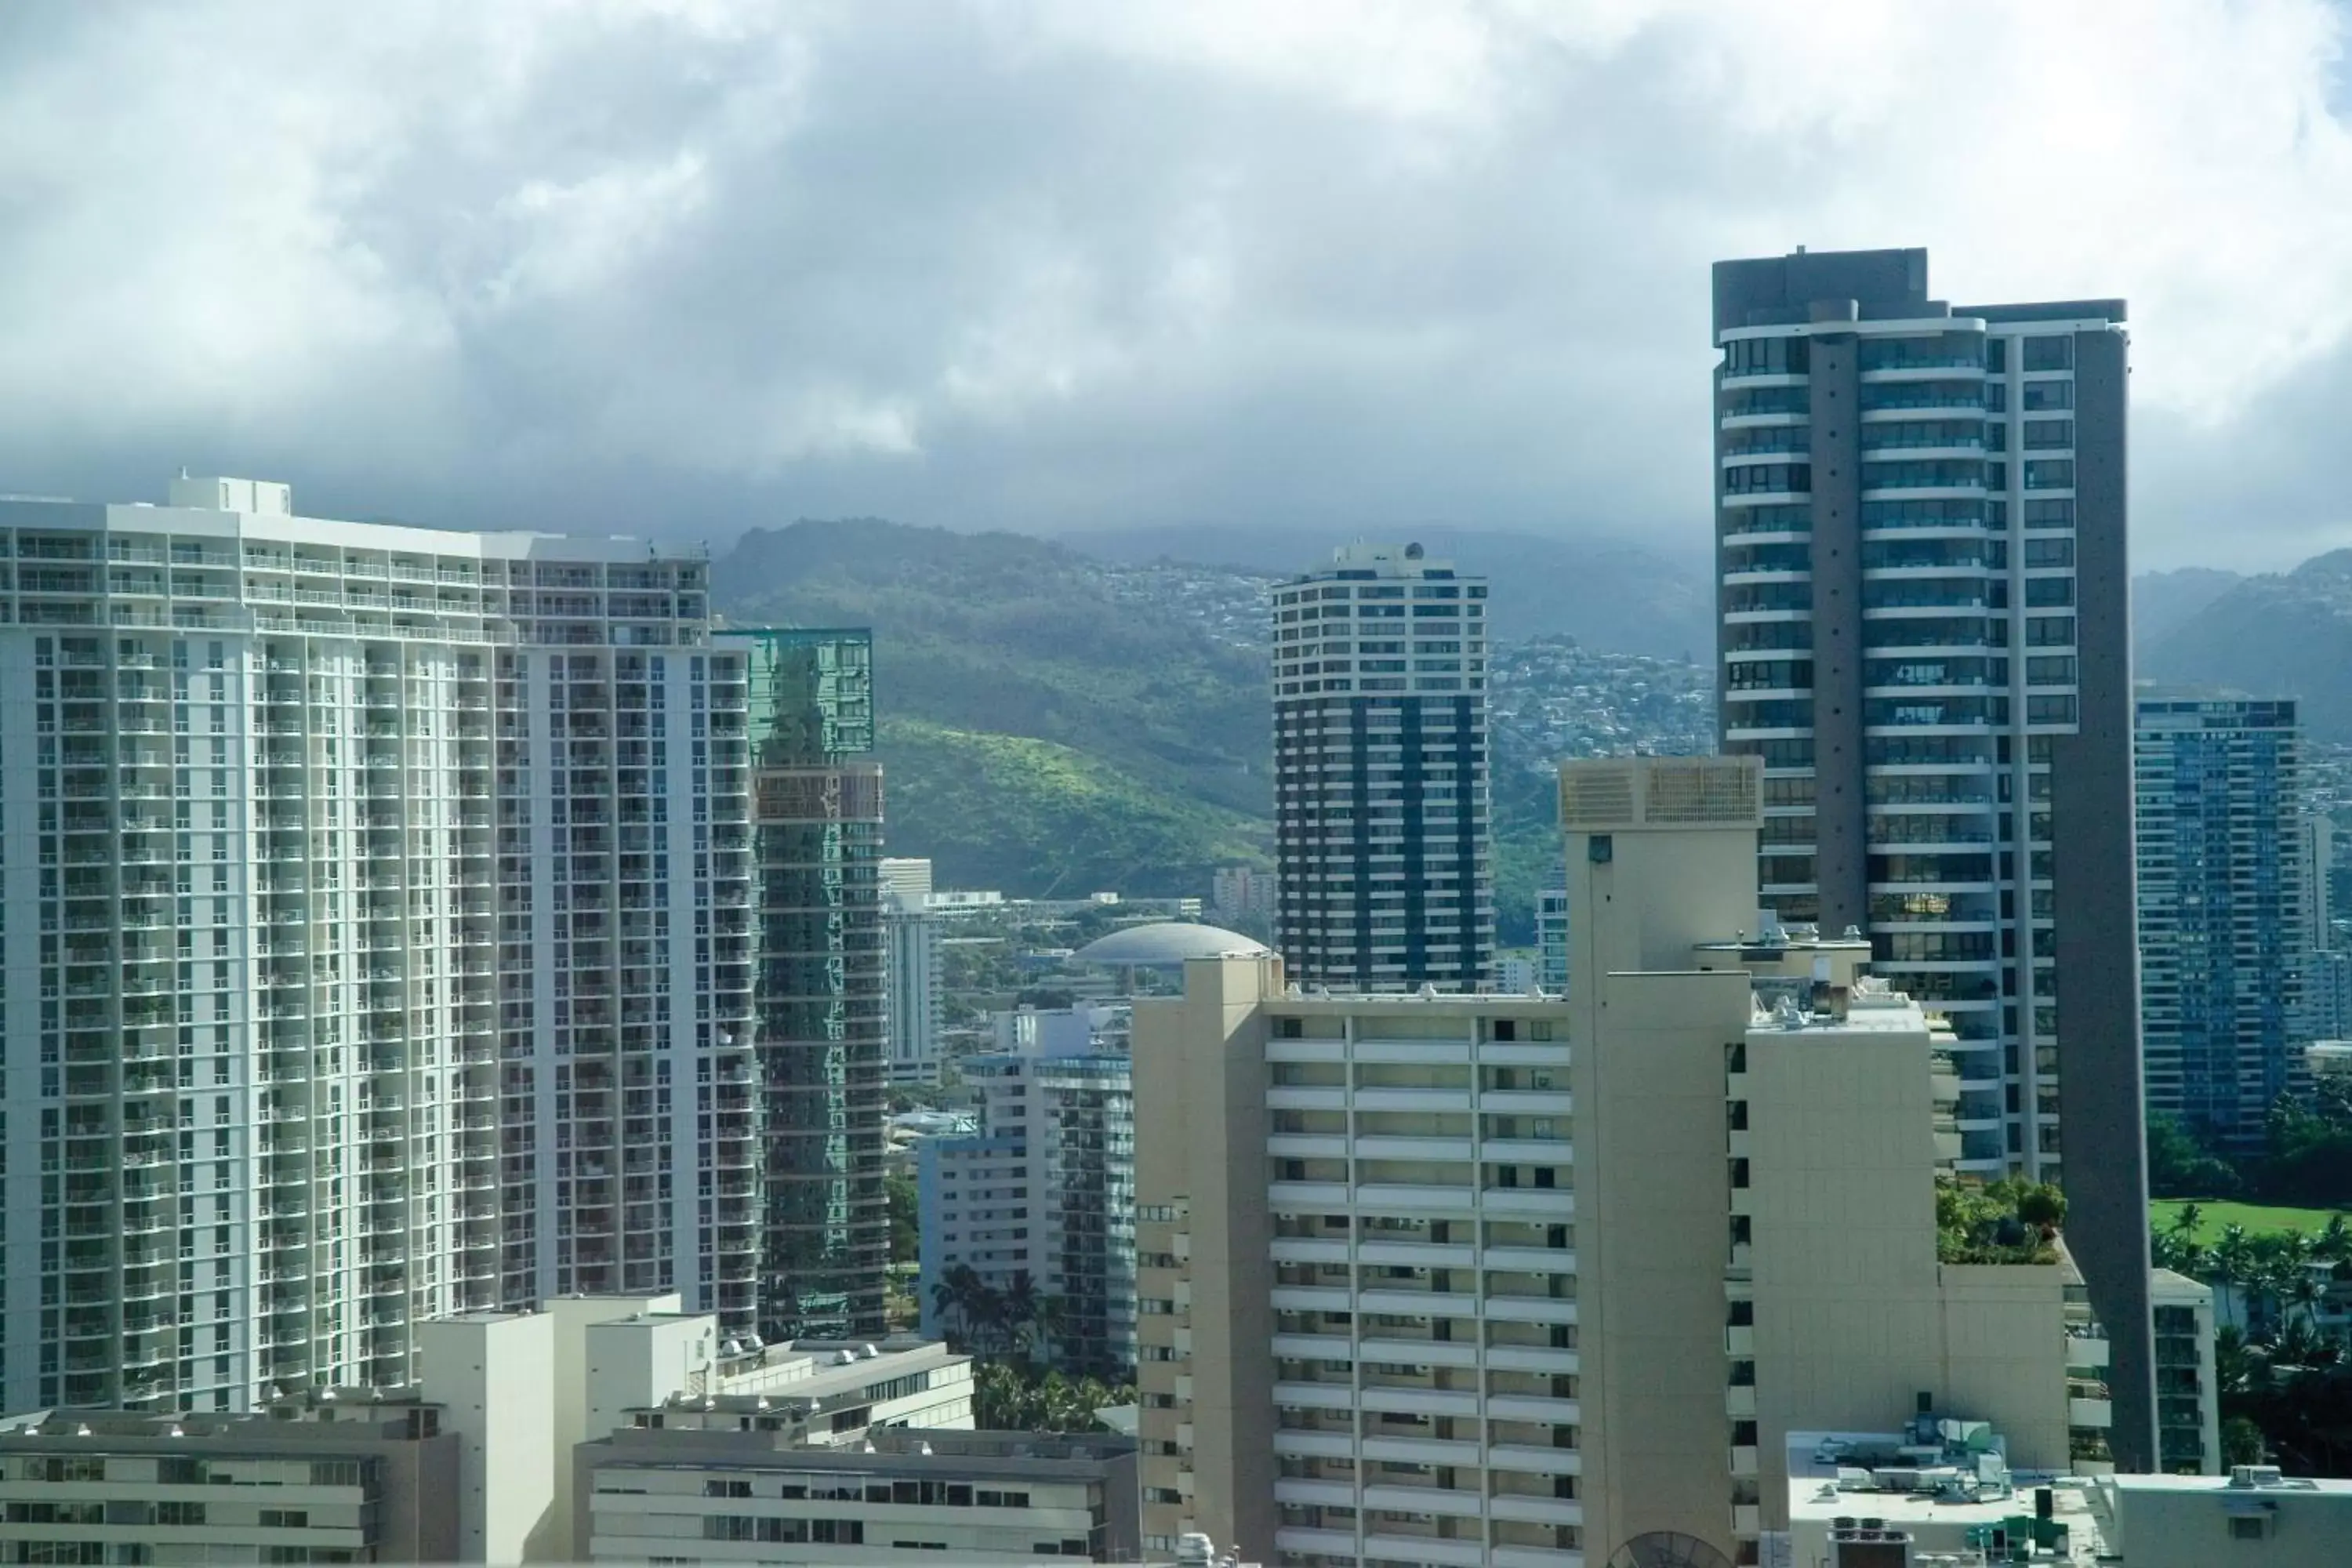 View (from property/room) in Waikiki Marina Resort at the Ilikai